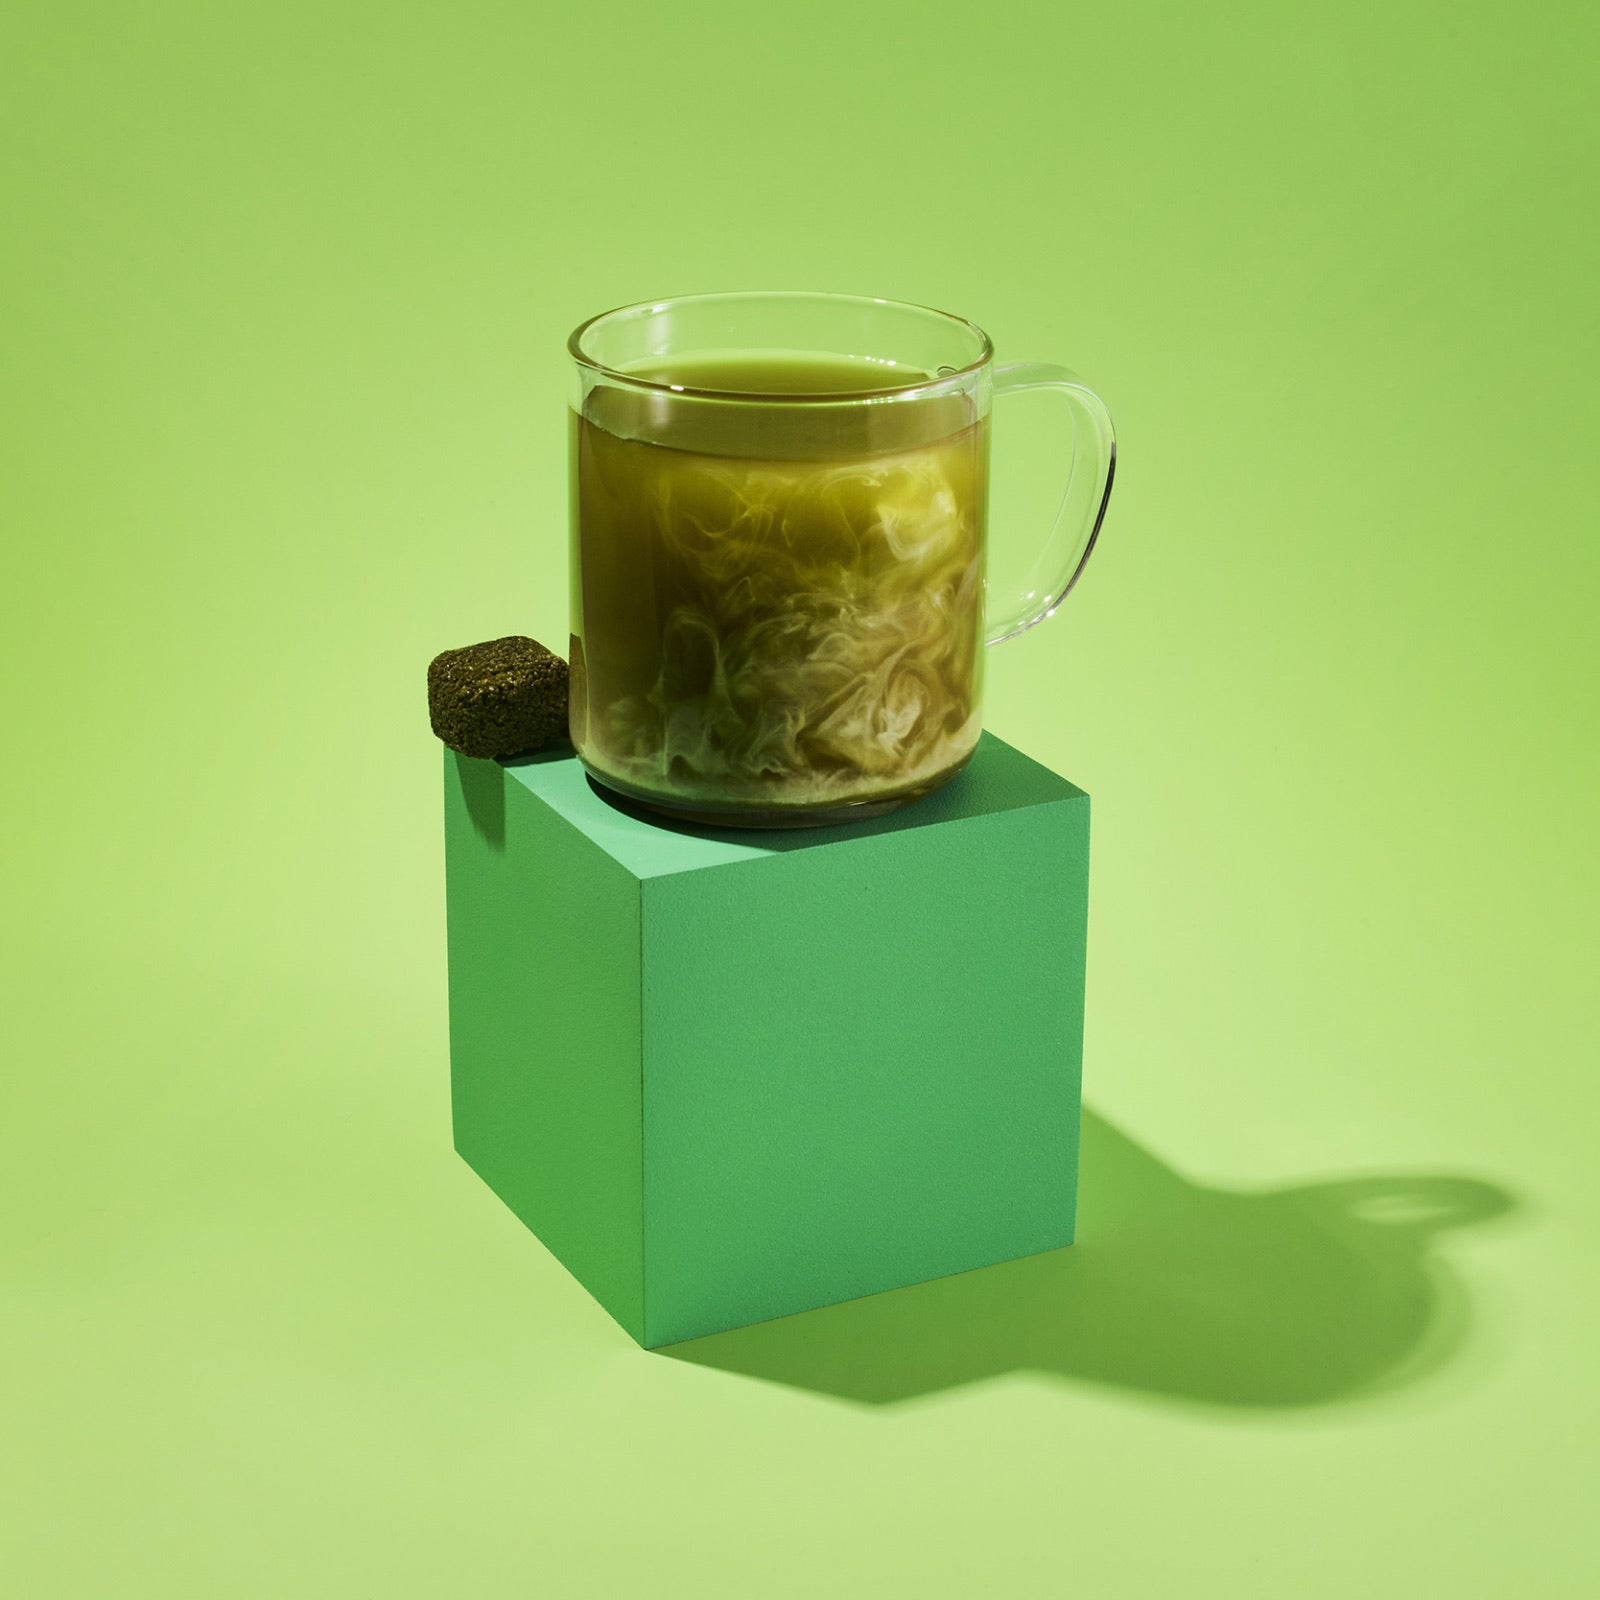 How to make matcha at home and benefits of drinking matcha green tea at  night - TE-A-ME